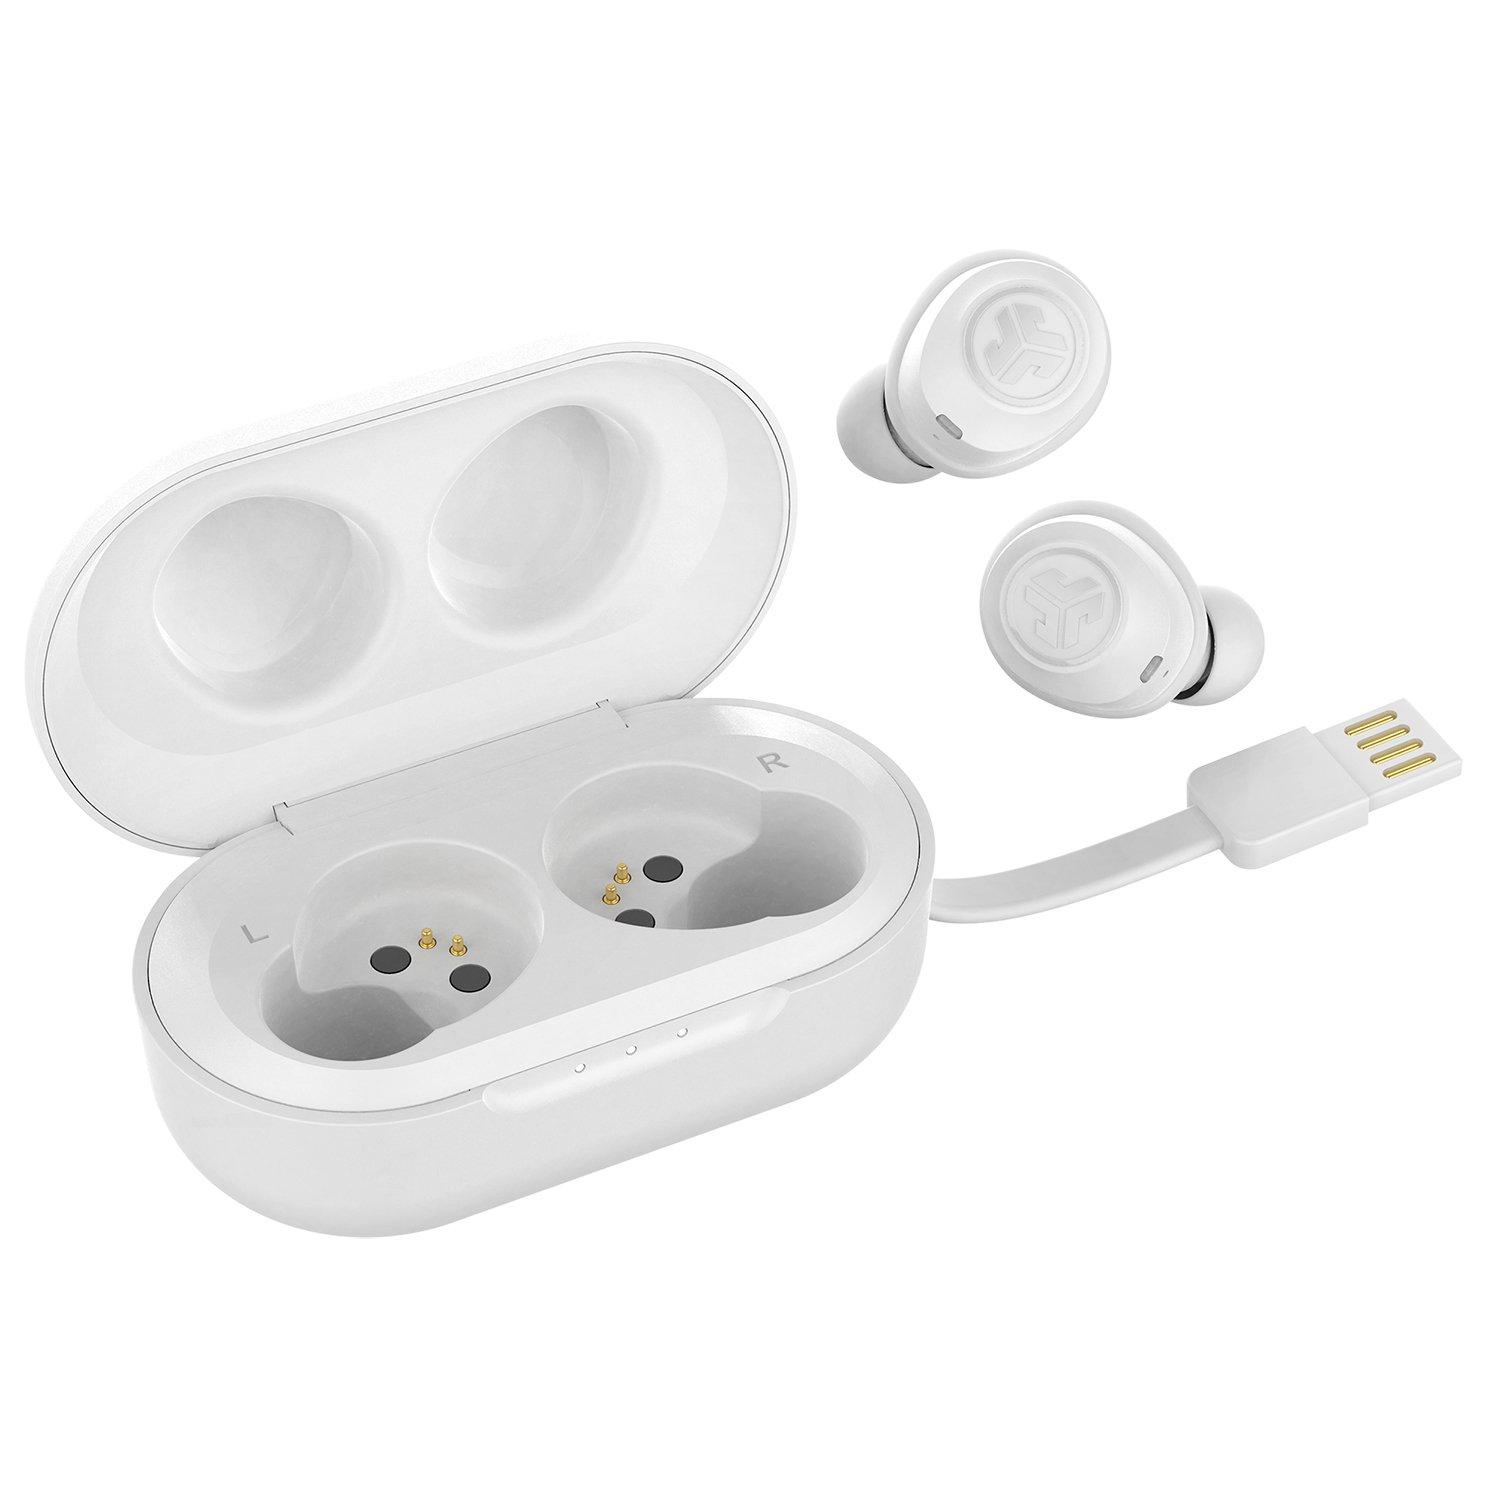 Jlab  JLab IEUEBJBUDSAIRRWHT82 cuffia e auricolare Cuffie True Wireless Stereo (TWS) In-ear MUSICA Bluetooth Bianco 